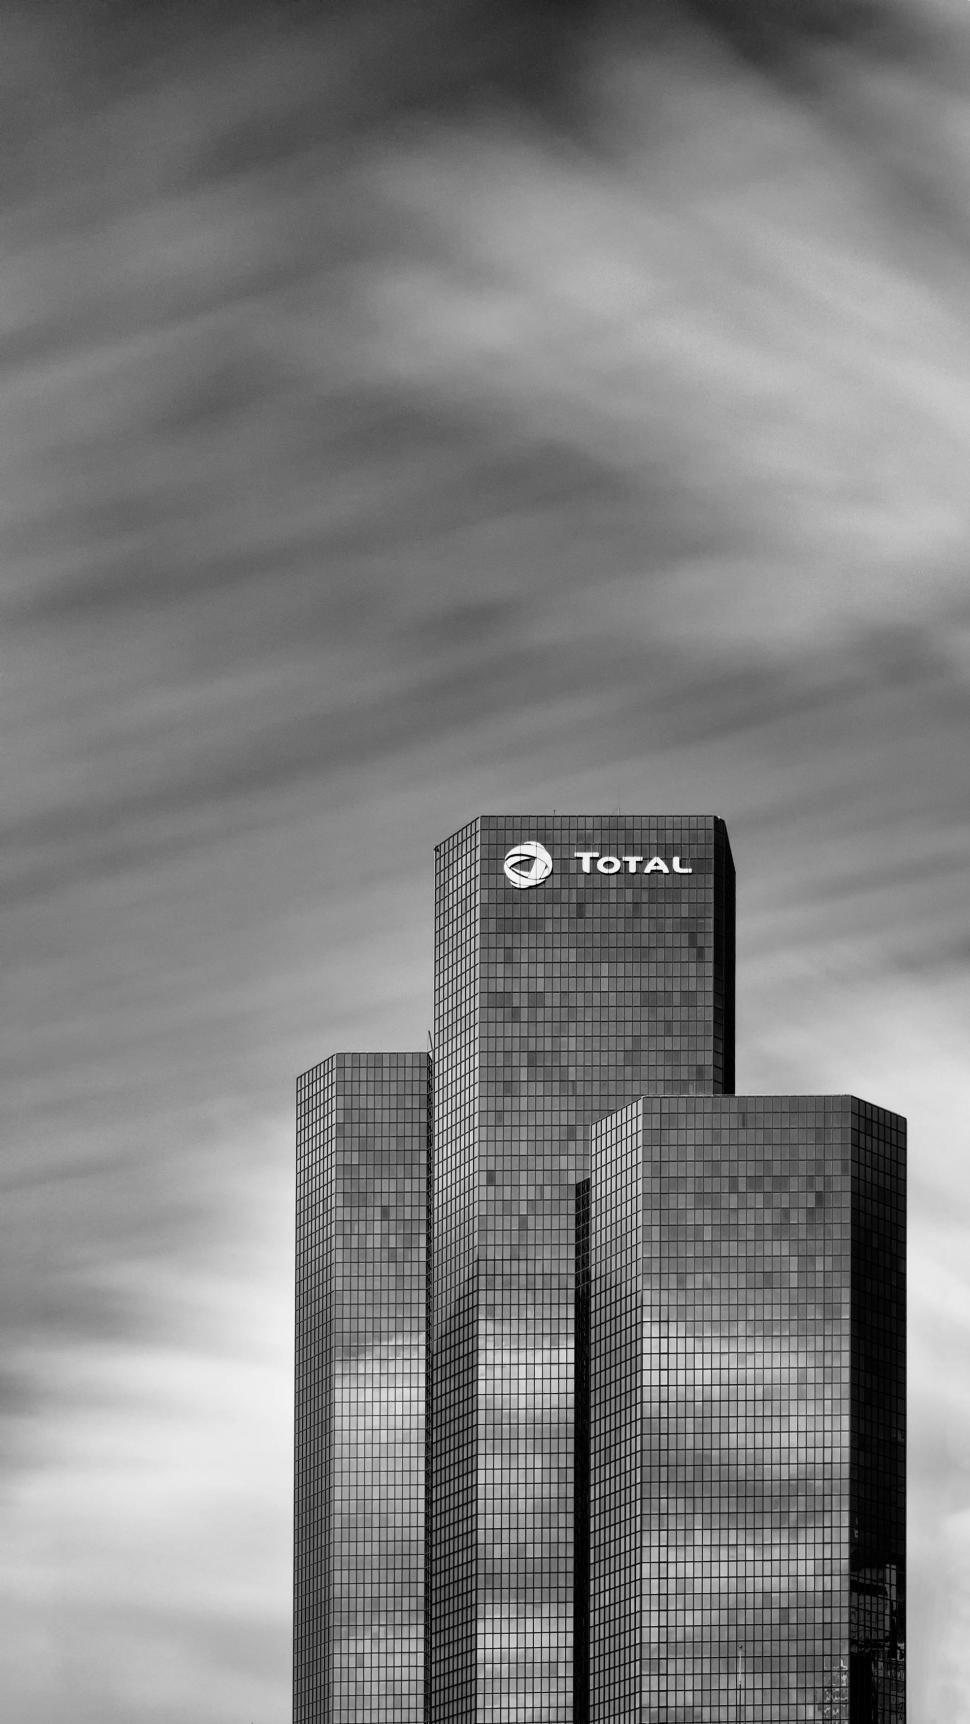 Download Free Stock Photo of Tour Total, La Défense, Paris 